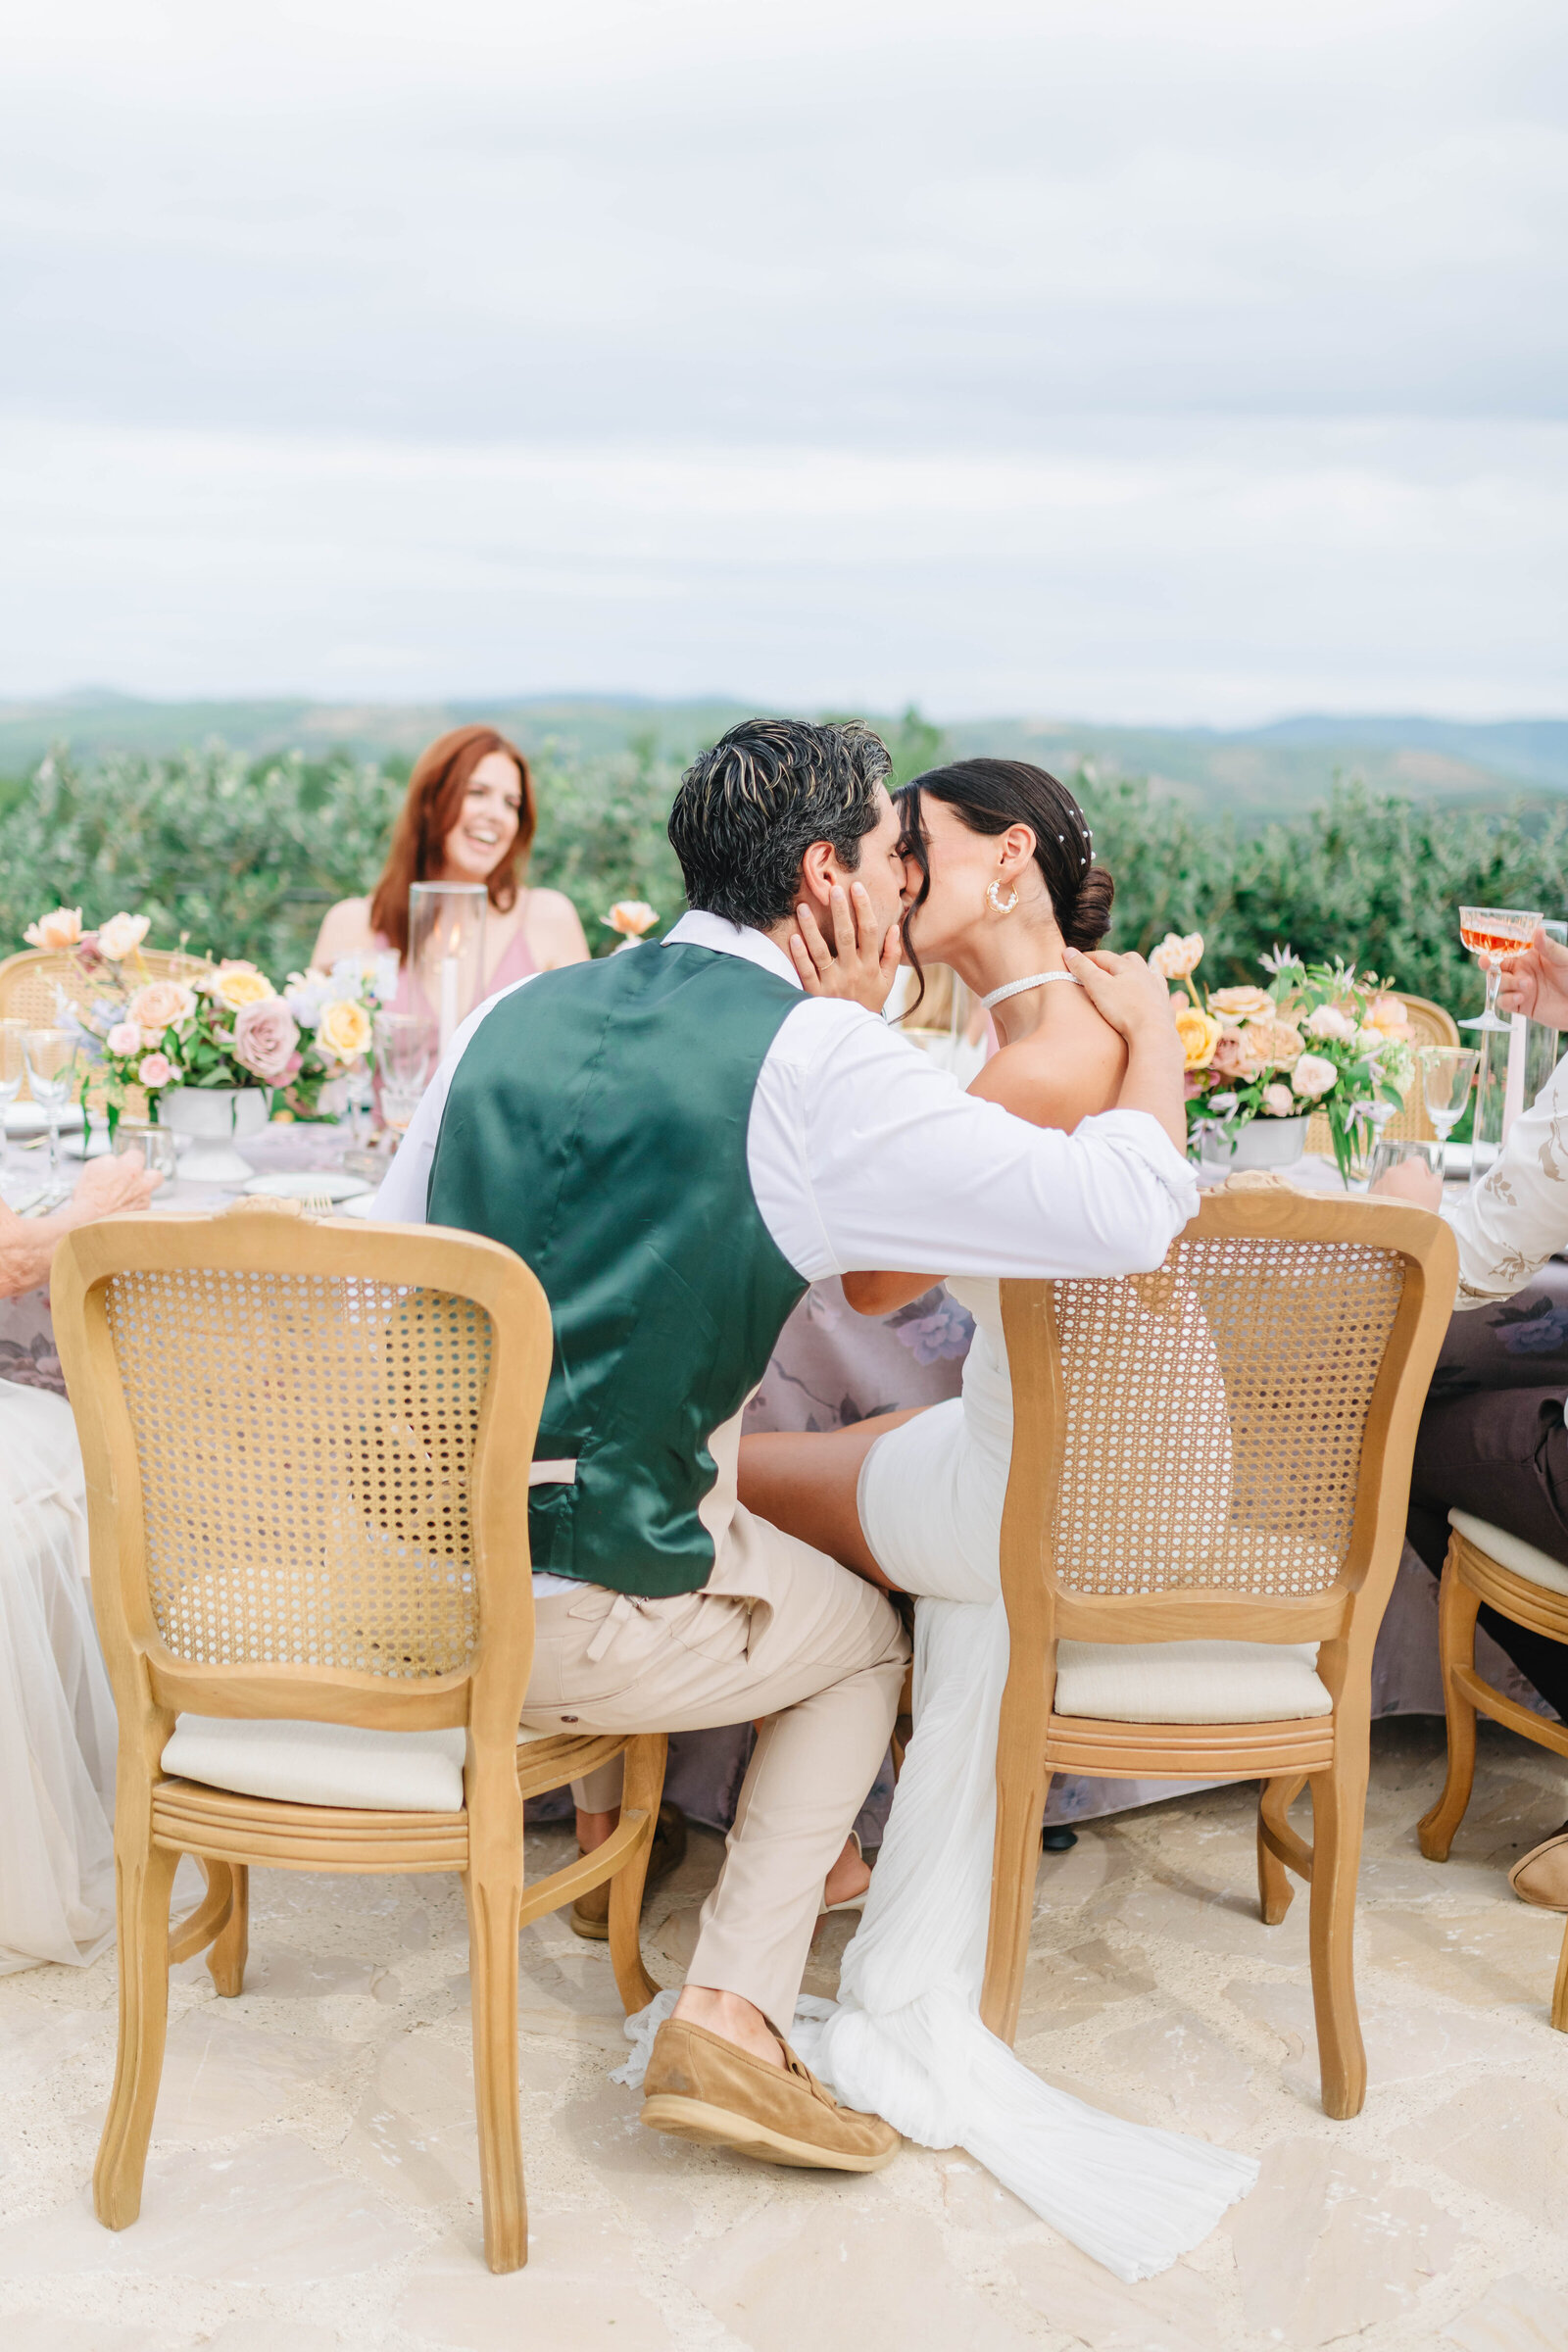 MorganeBallPhotography-Wedding-Tuscany-TheClubHouse-LovelyInstants-02-WelcomeDinner-atmosphere-lq-76-3298